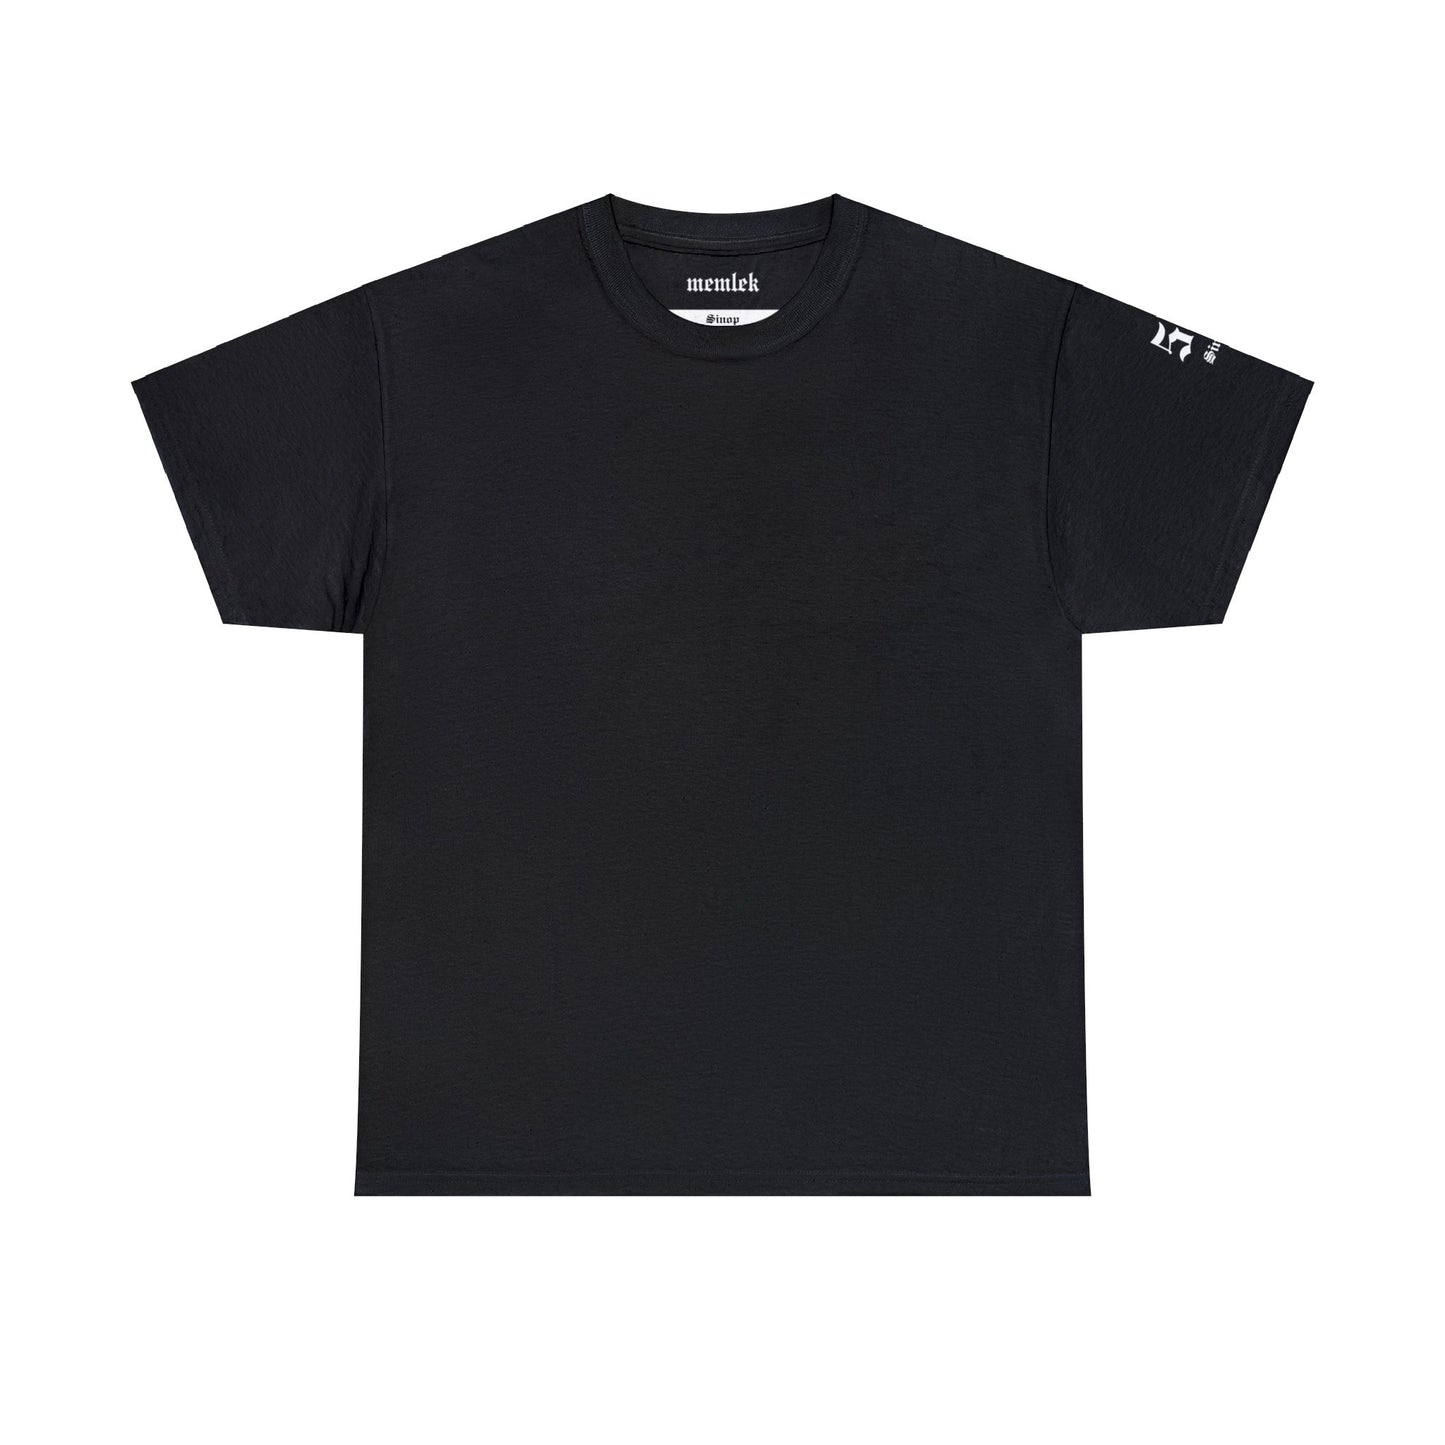 Şehirim - 57 Sinop - T-Shirt - Back Print - Black